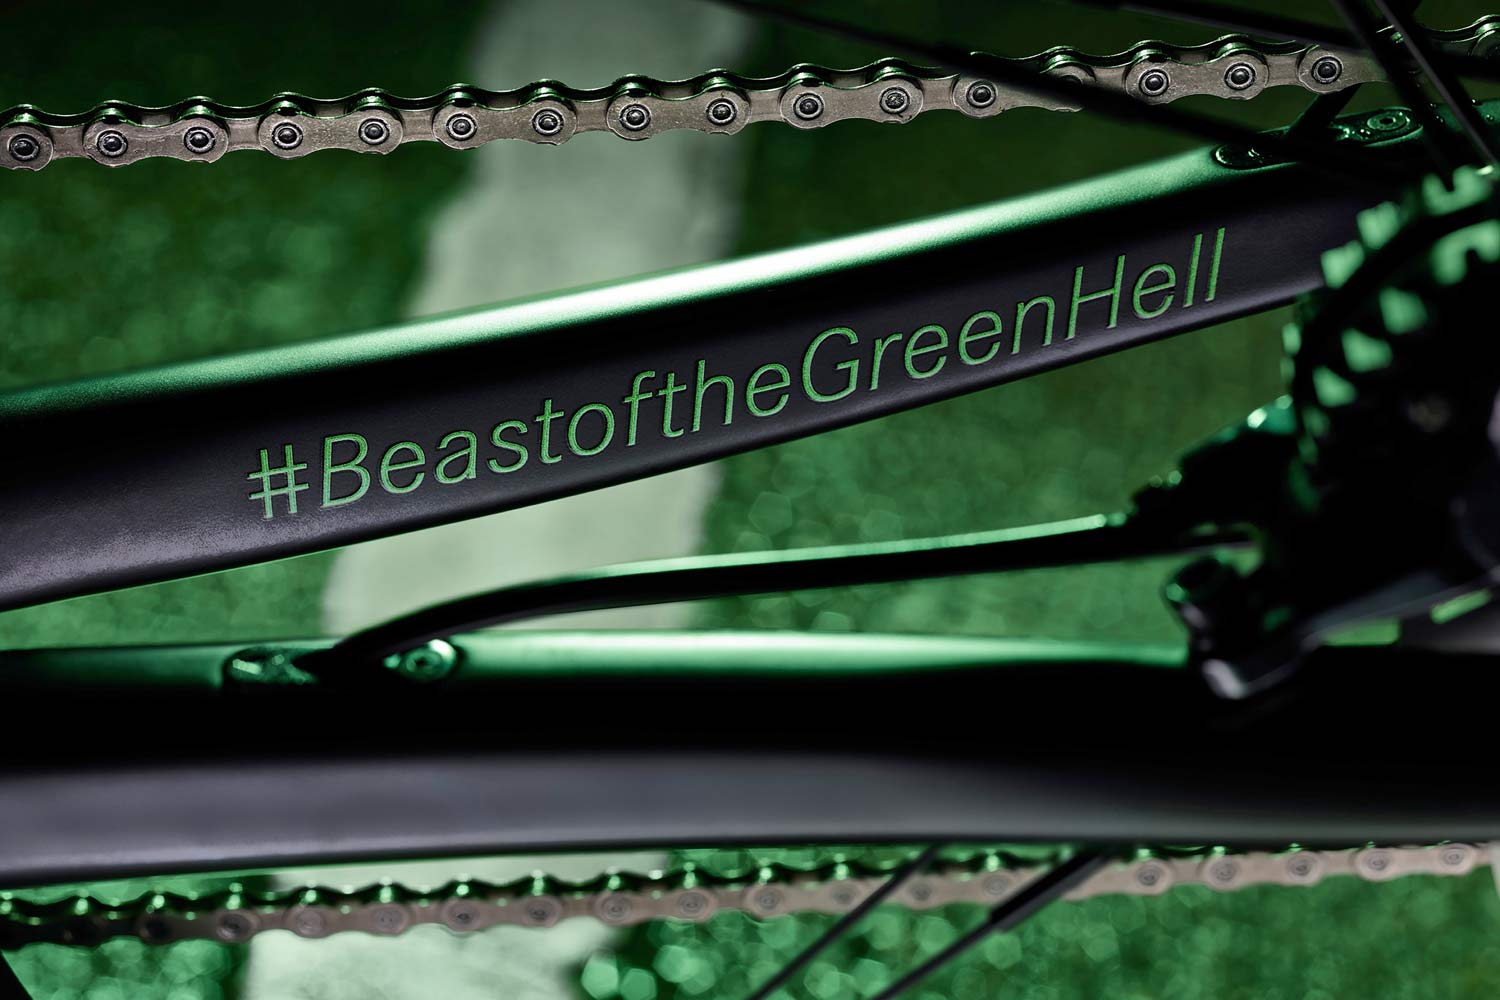 Rotwild x Mercedes-AMG R.S2 "Beast of the Green Hell" limited edition lightweight carbon disc-brake road bike #BeastoftheGreenHell